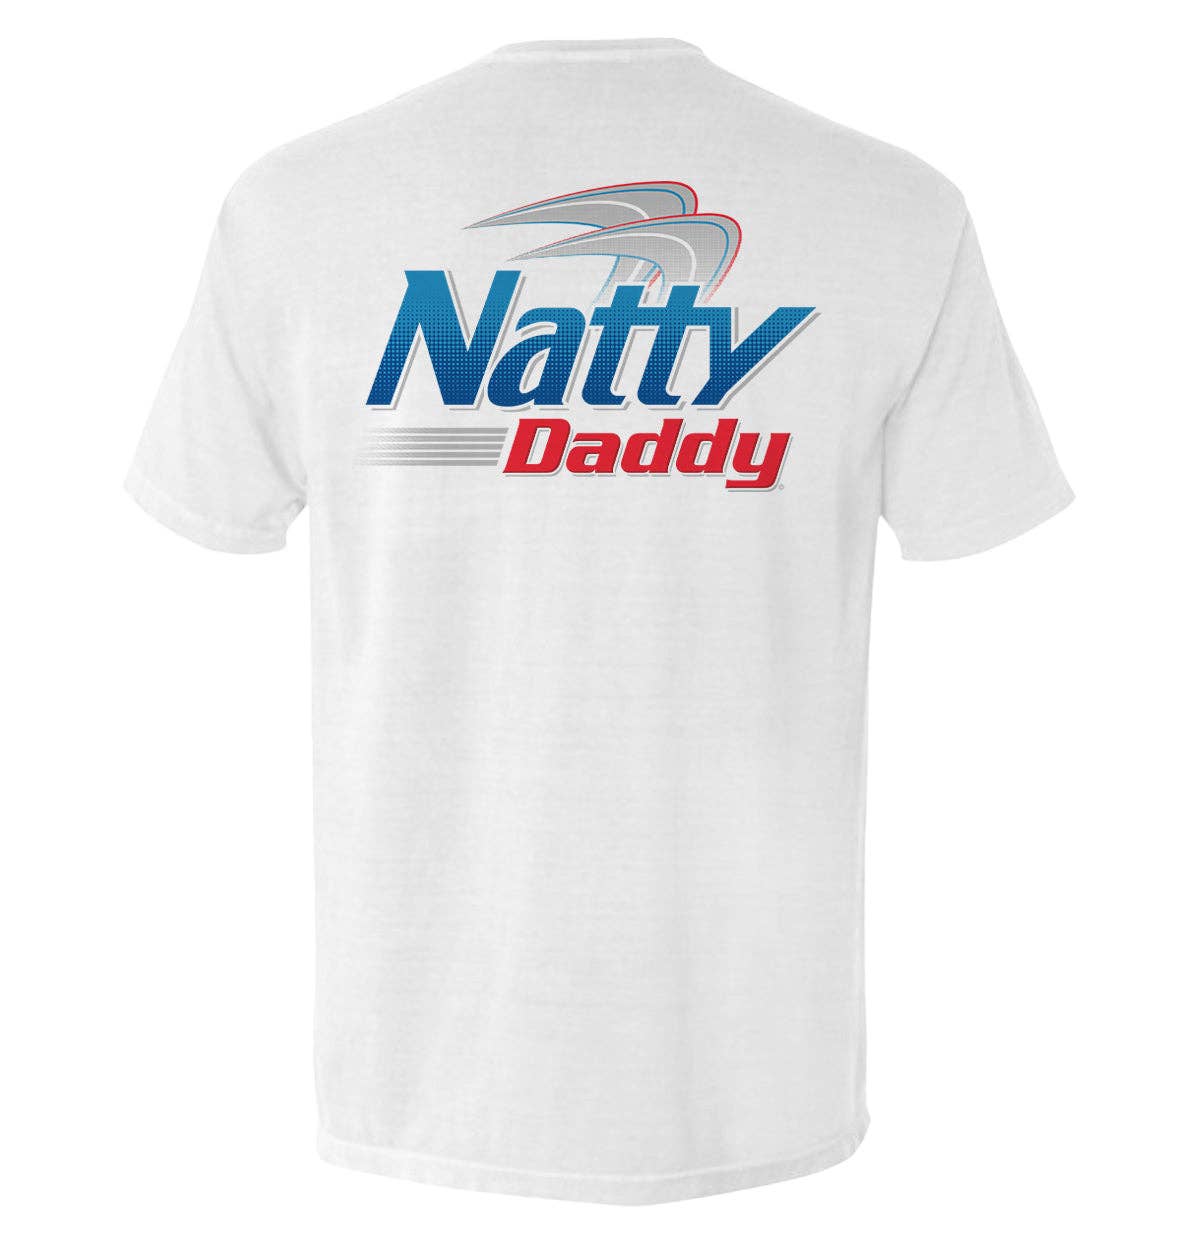 Natty Daddy Tee